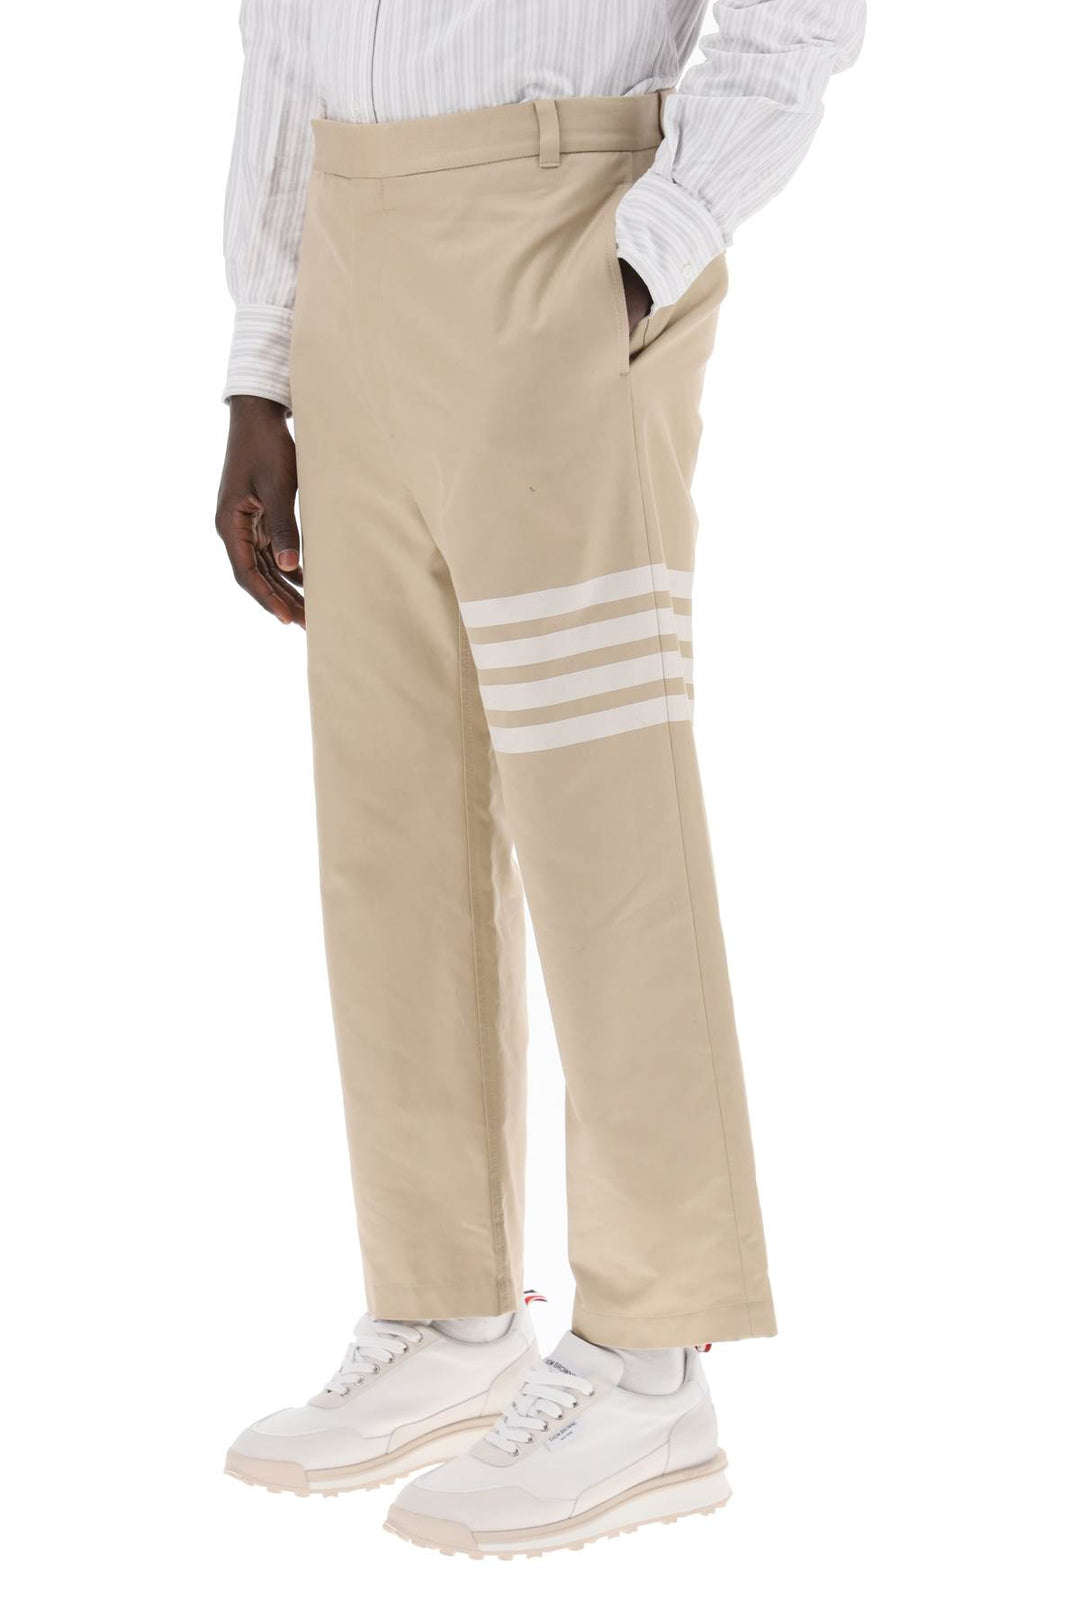 Thom browne pants with 4-bar-3